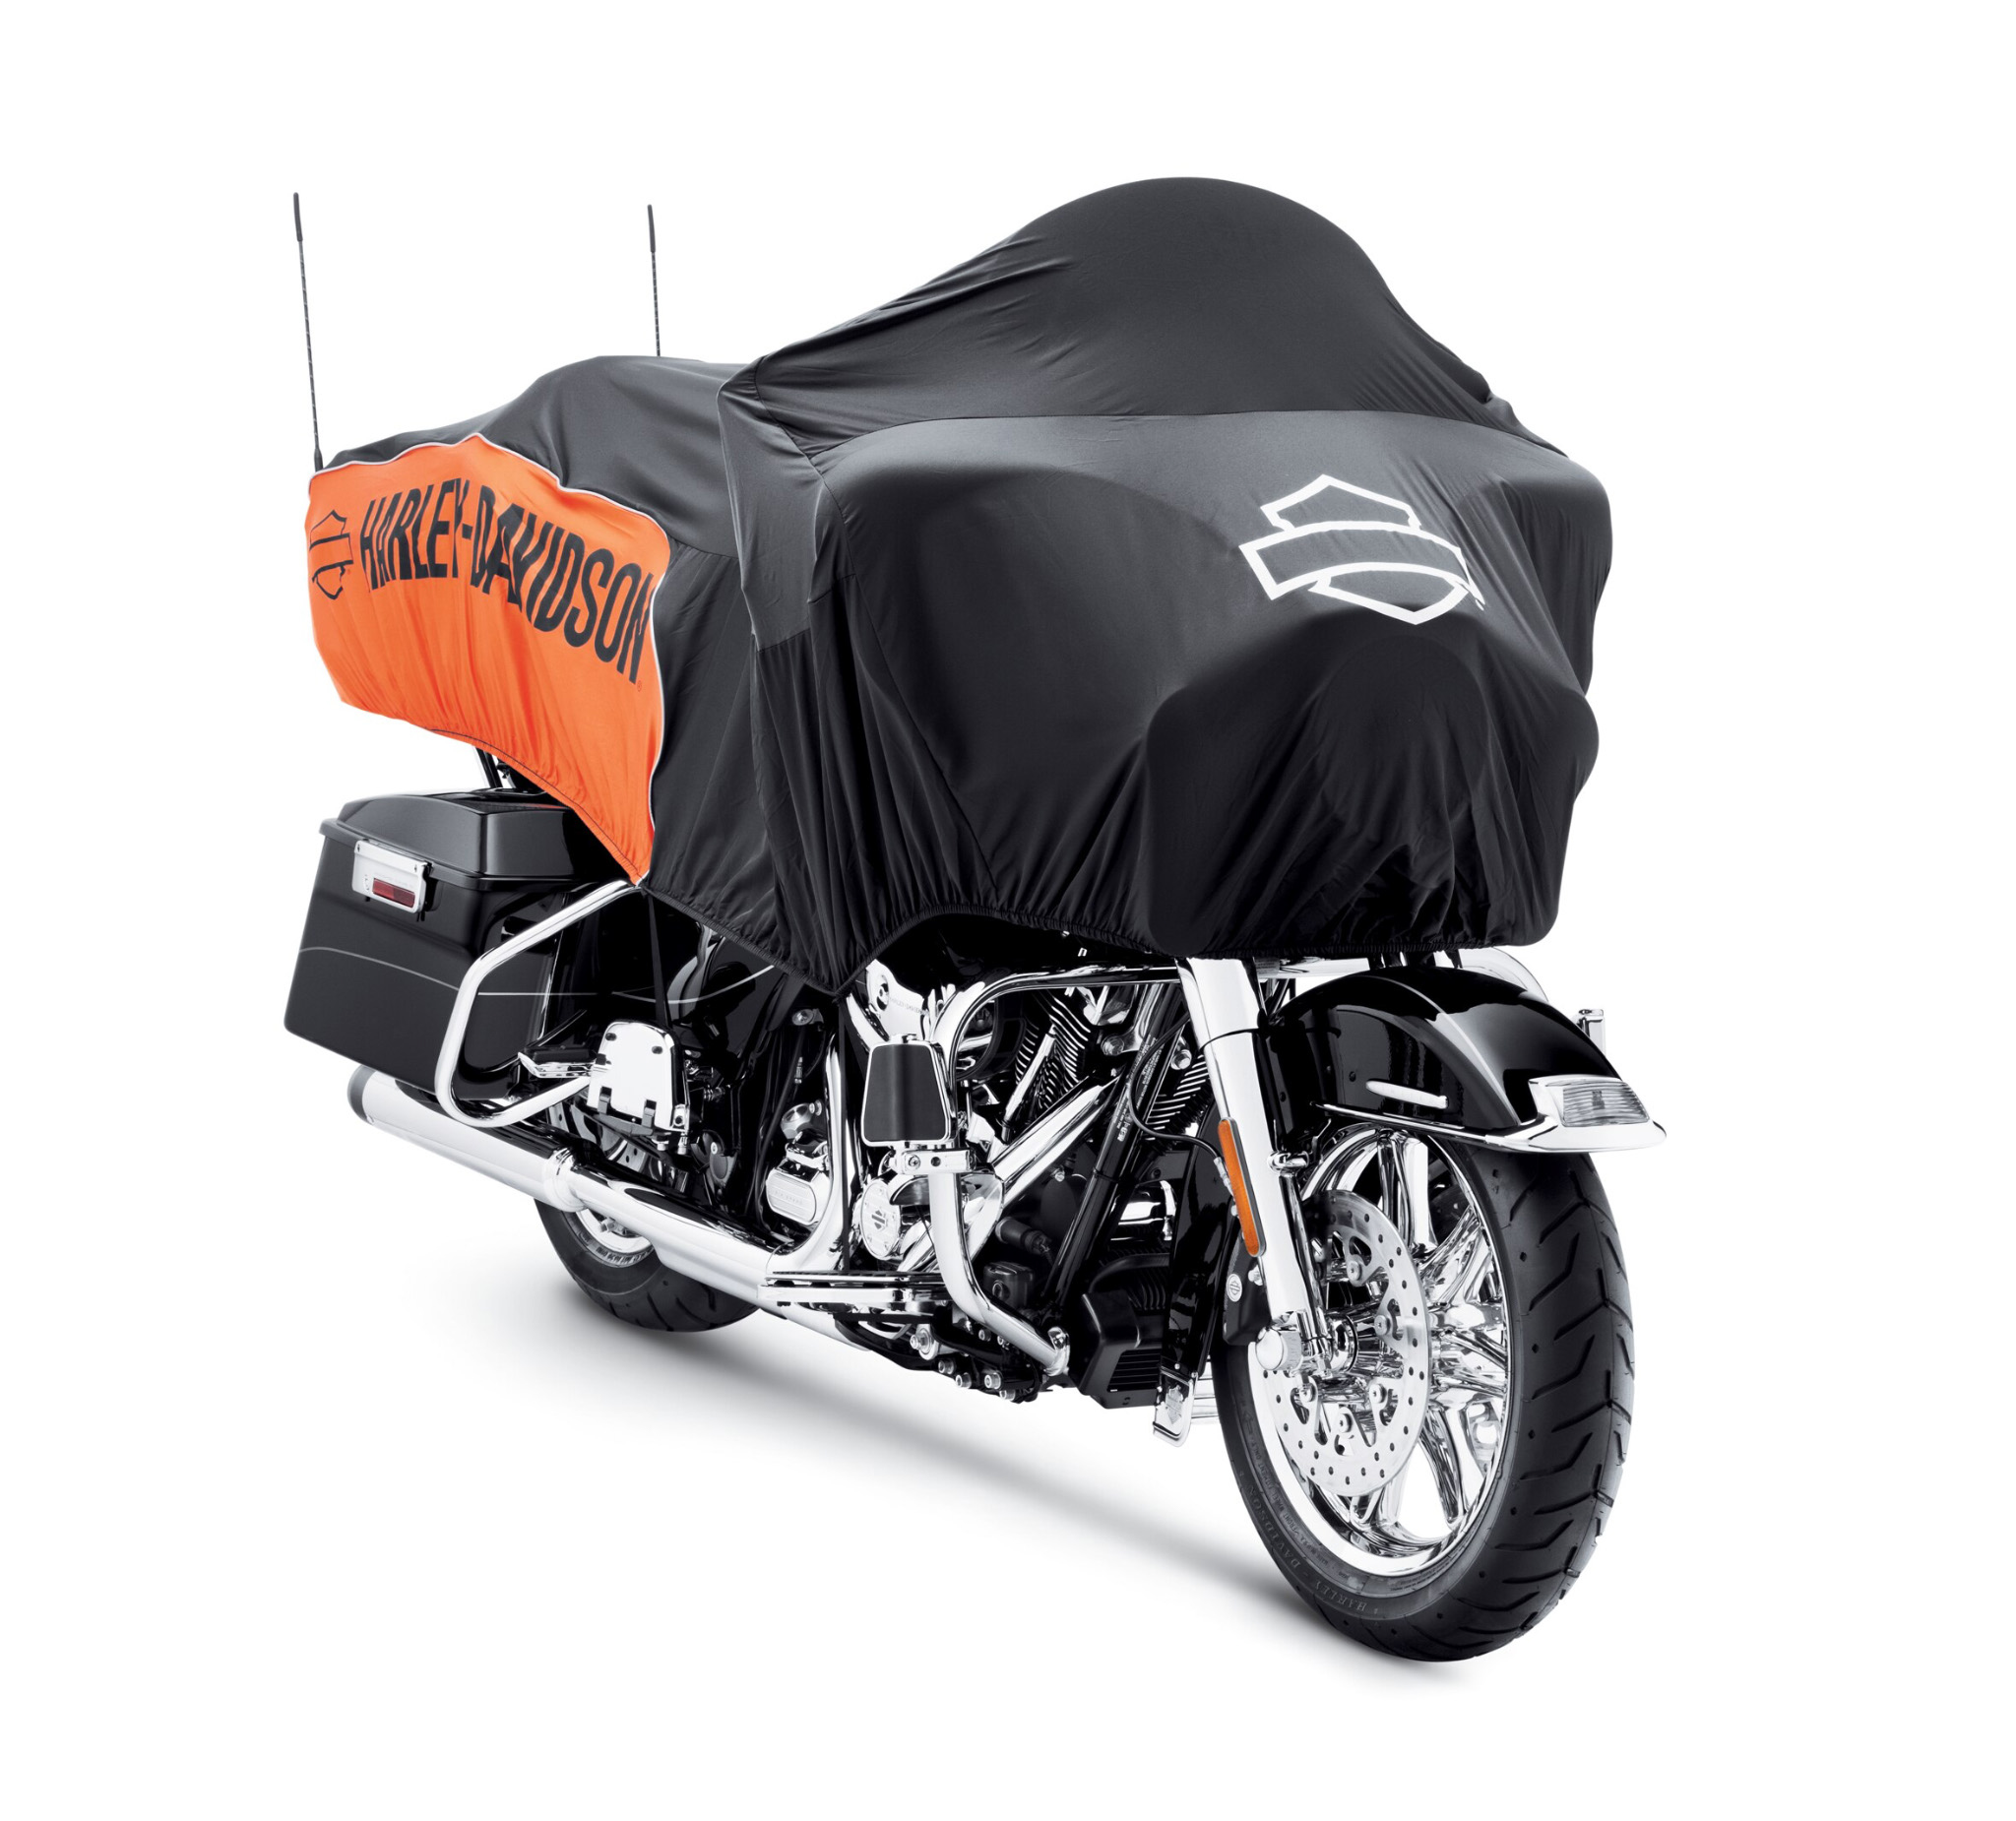 Motorcycle Bike indoor dust cover For Harley Davidson HD Road King cruiser 